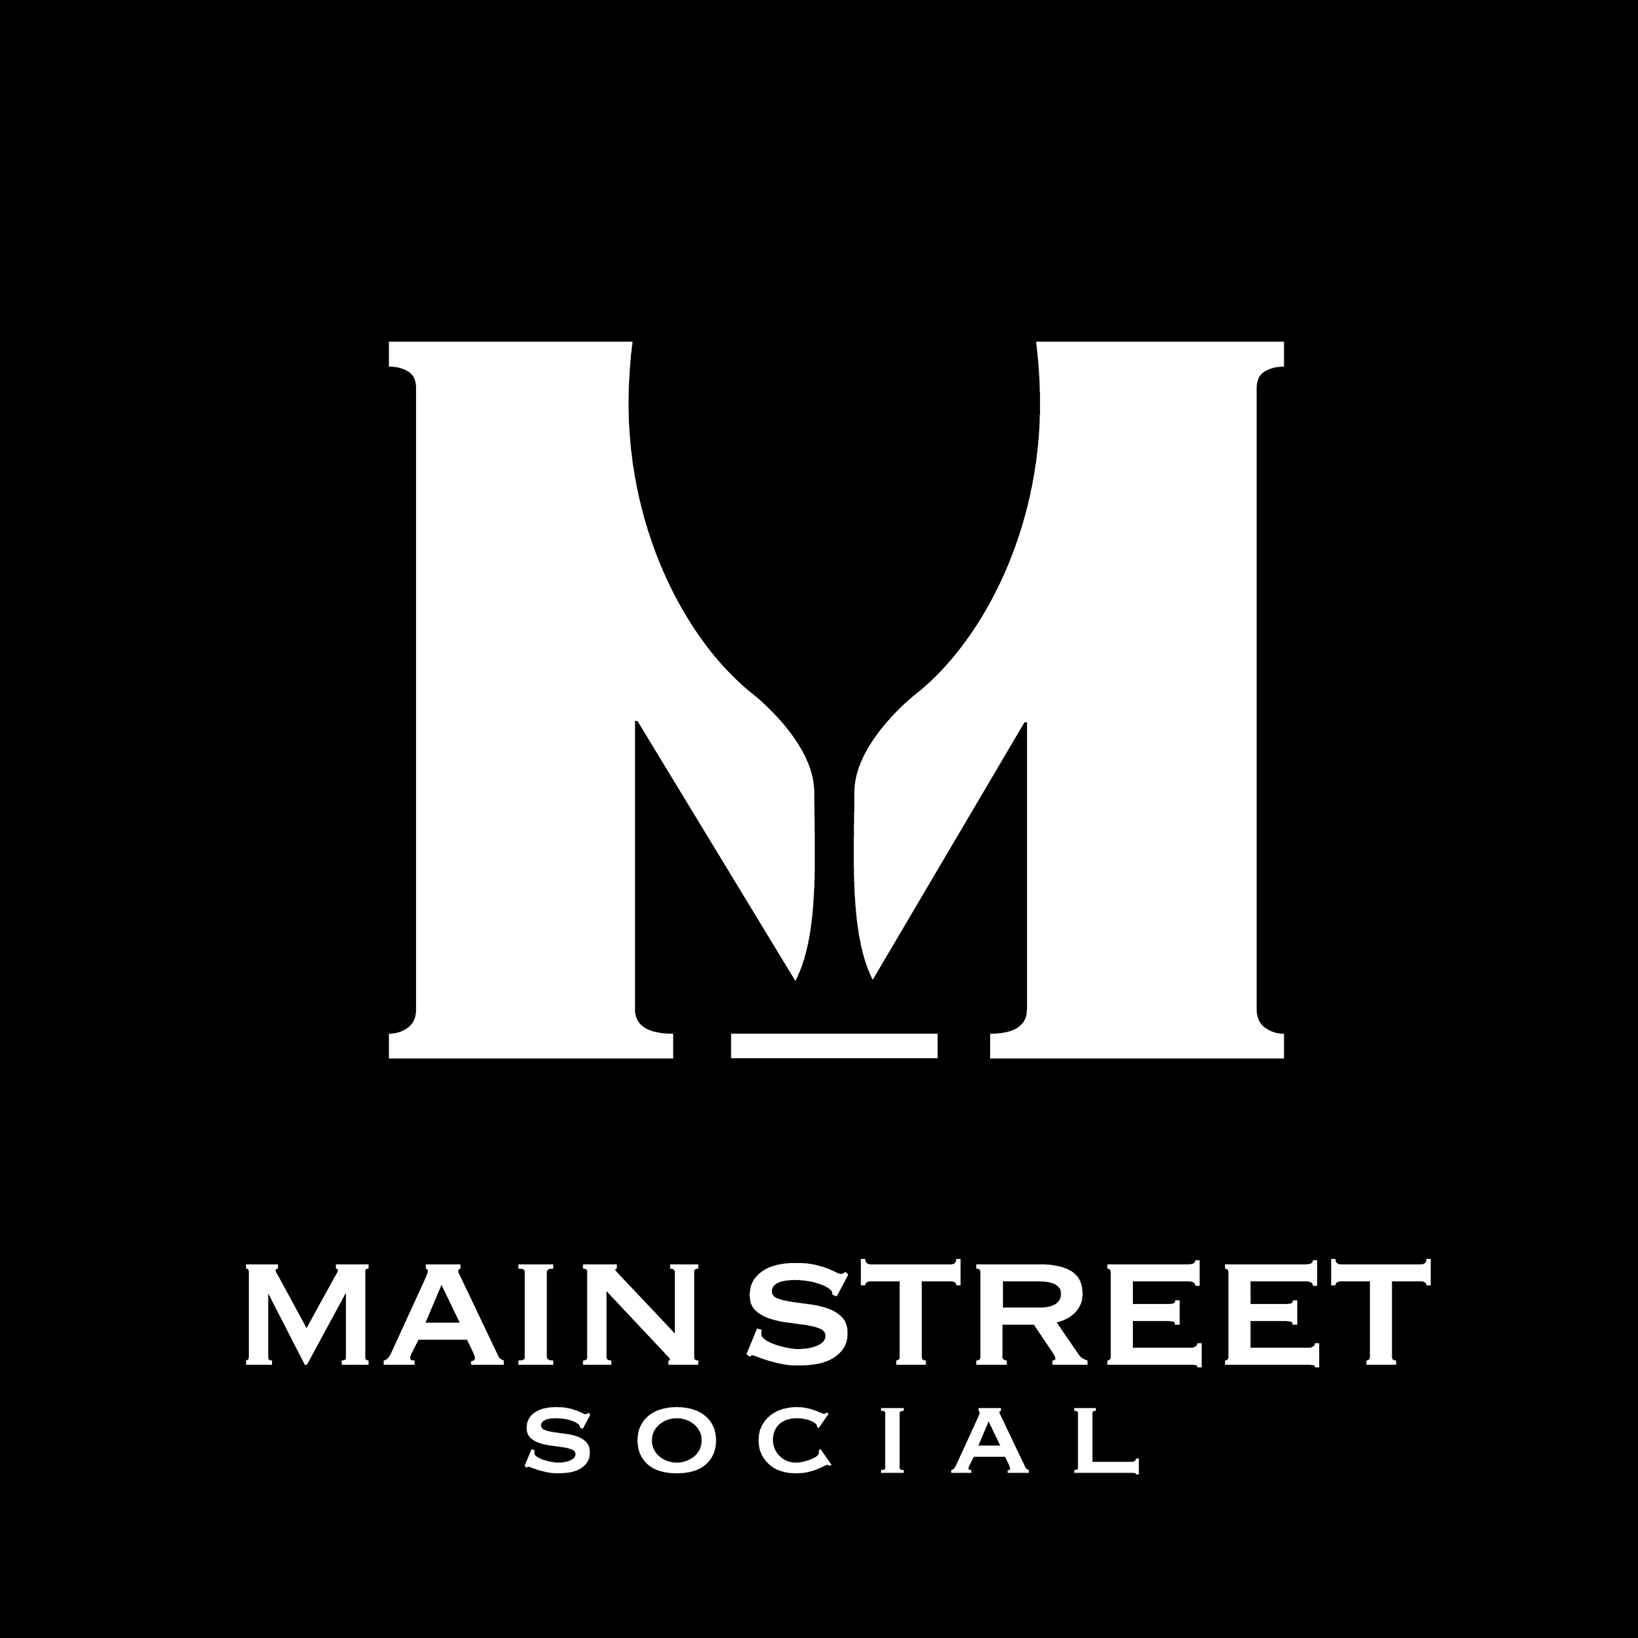 Main Street Social